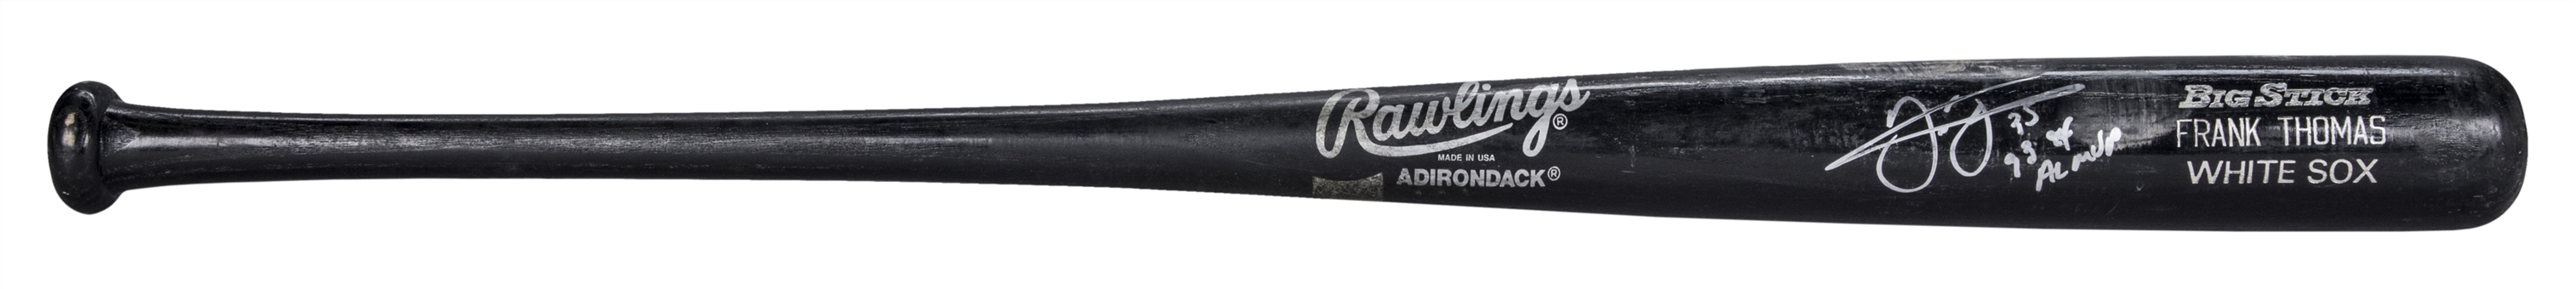 1996 Frank Thomas Game Used and Signed Adirondack Rawlings Bat - Heavy Use and Perfect 10 (PSA/DNA GU 10)